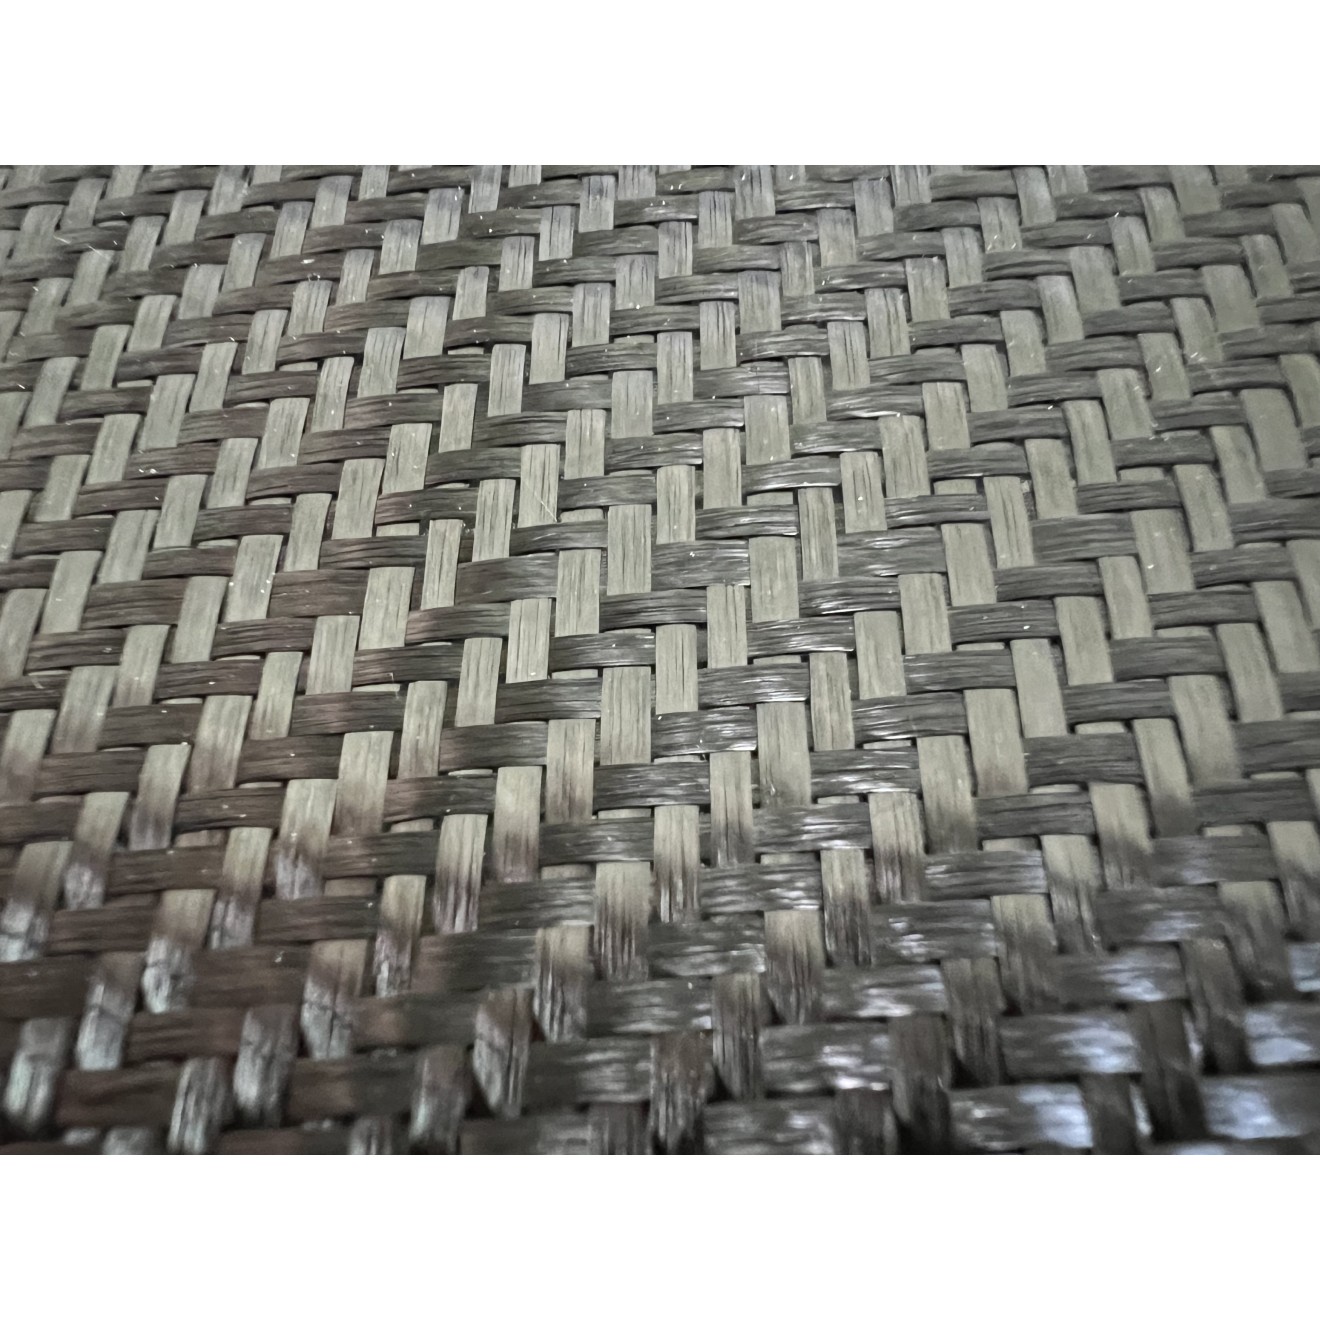 Woven carbon fiber fabric 3K 200g/m² twill 2/2, EP-Powdered, width 100cm